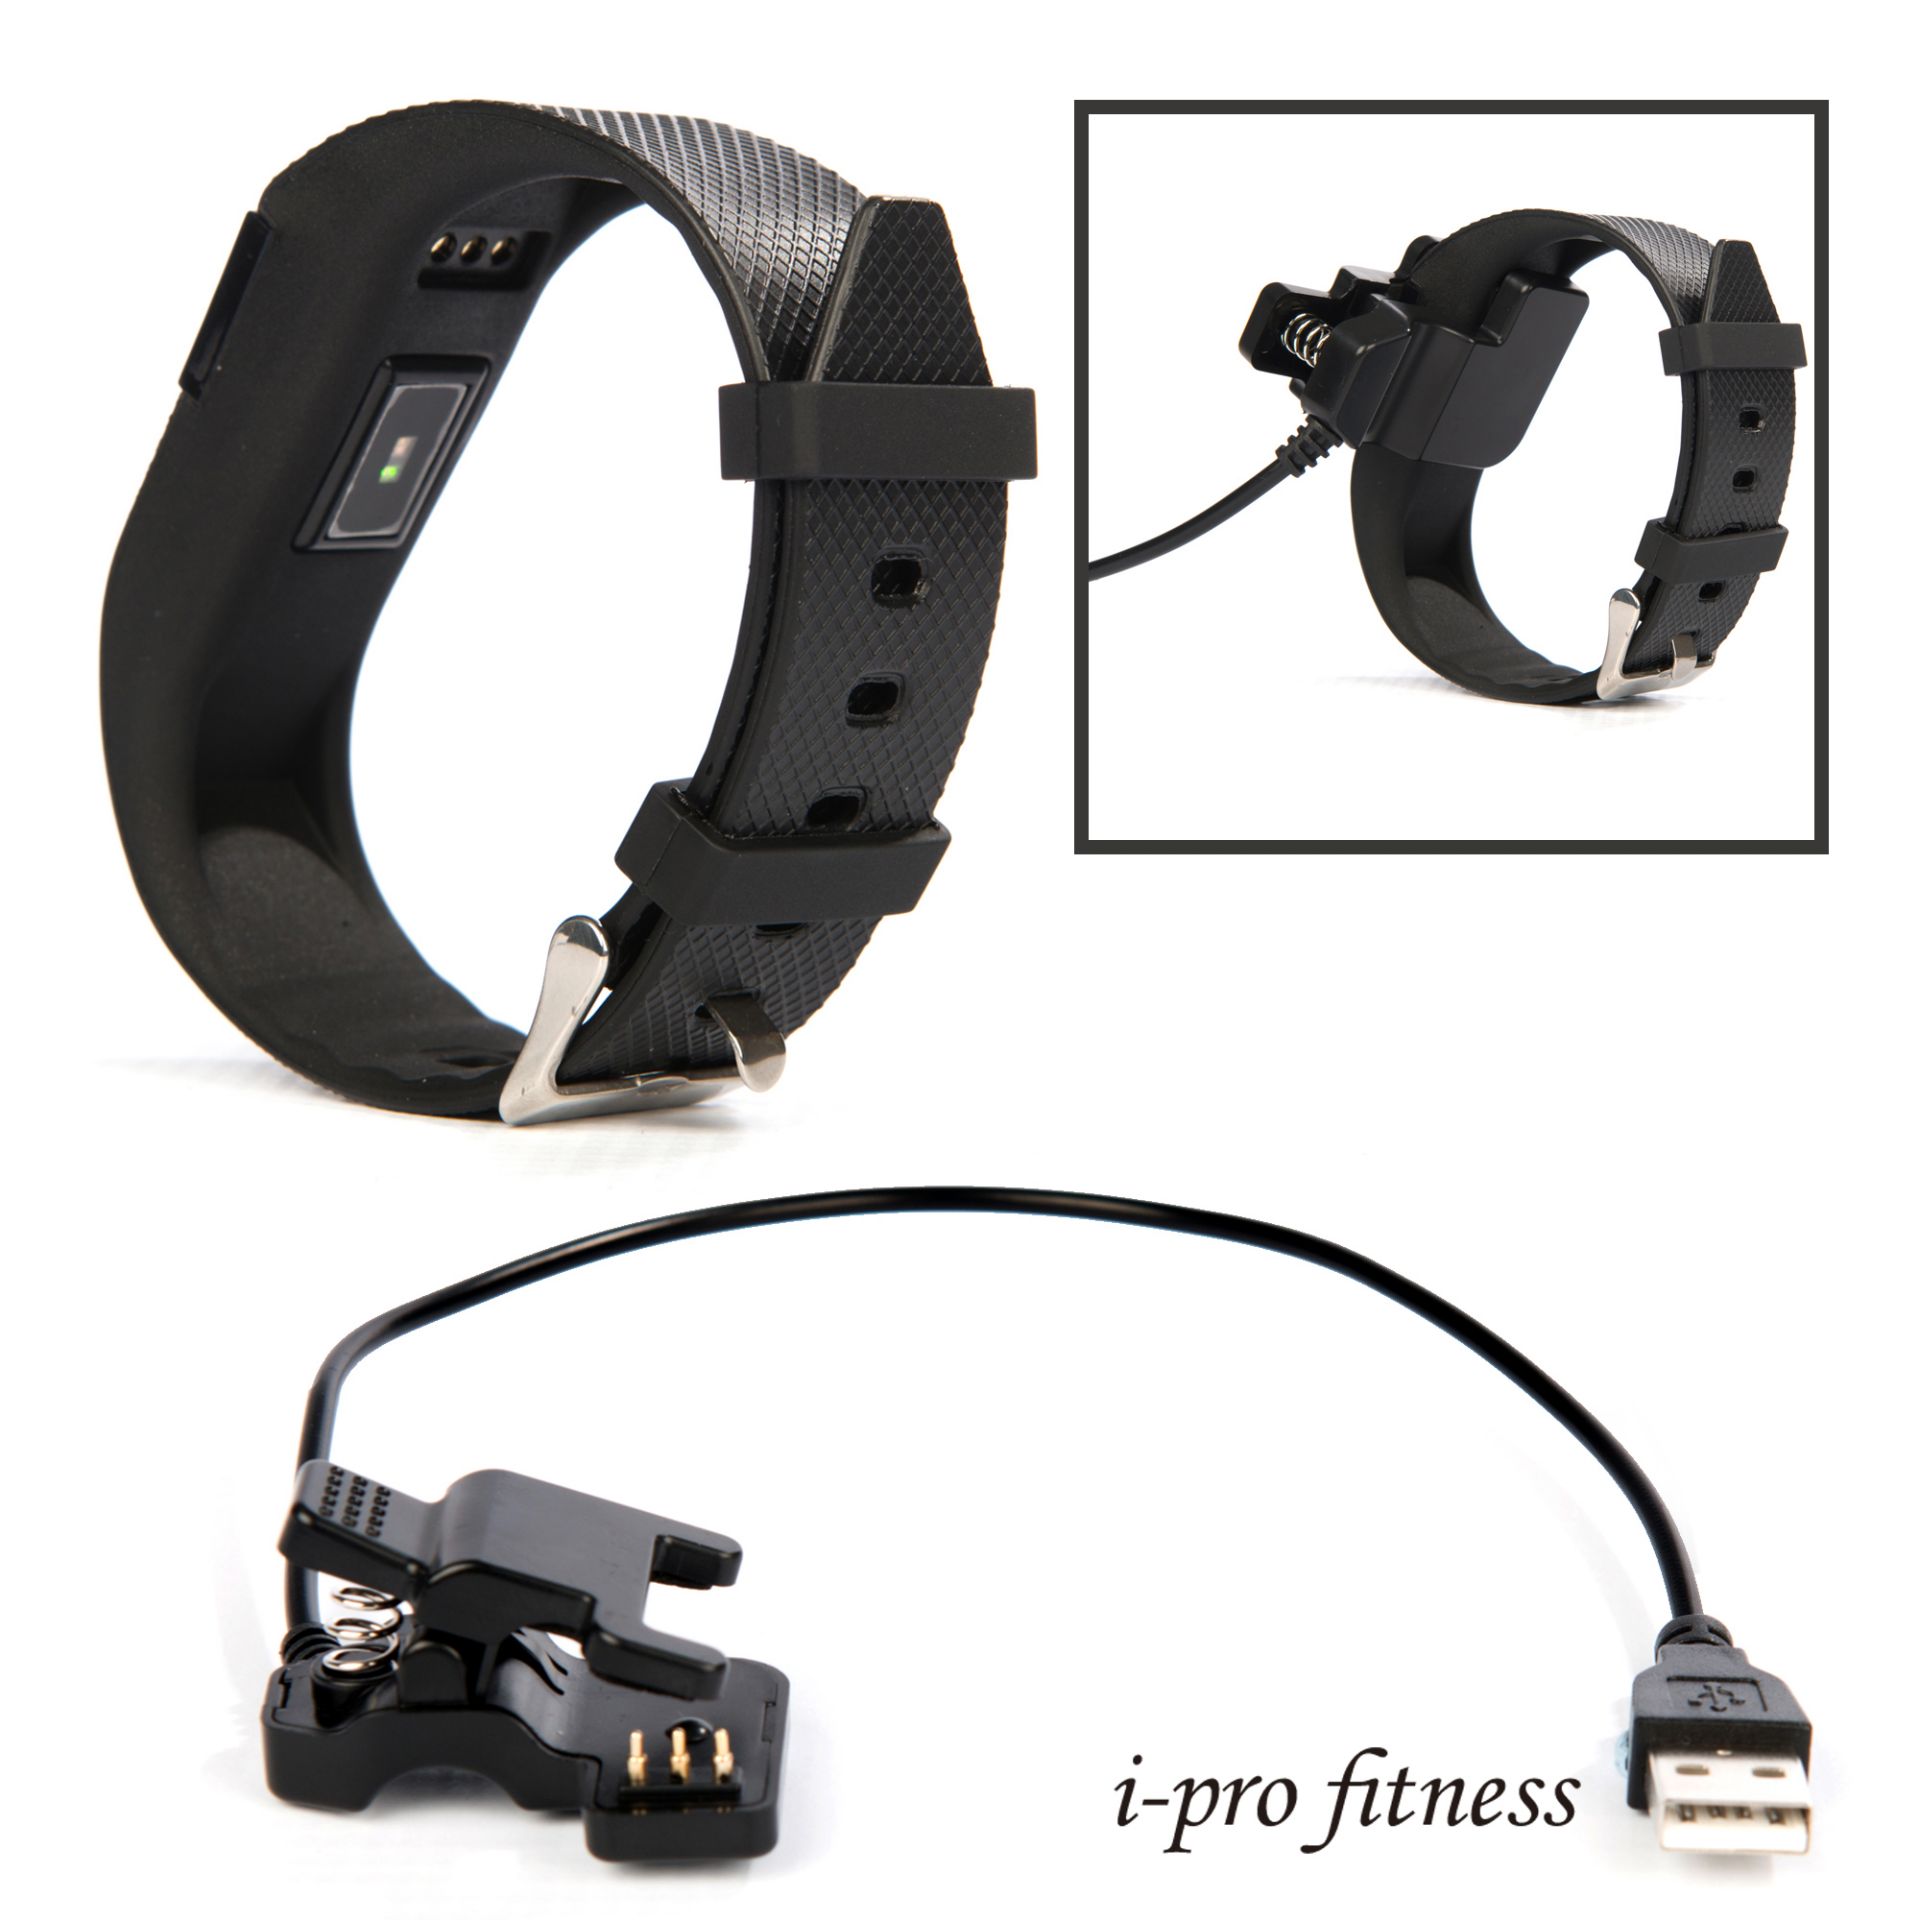 Fitness Tracker i-pro fitness, Bluetooth 4.0 Sports Smart Bracelet, Heart Rate Monitor - Image 7 of 8